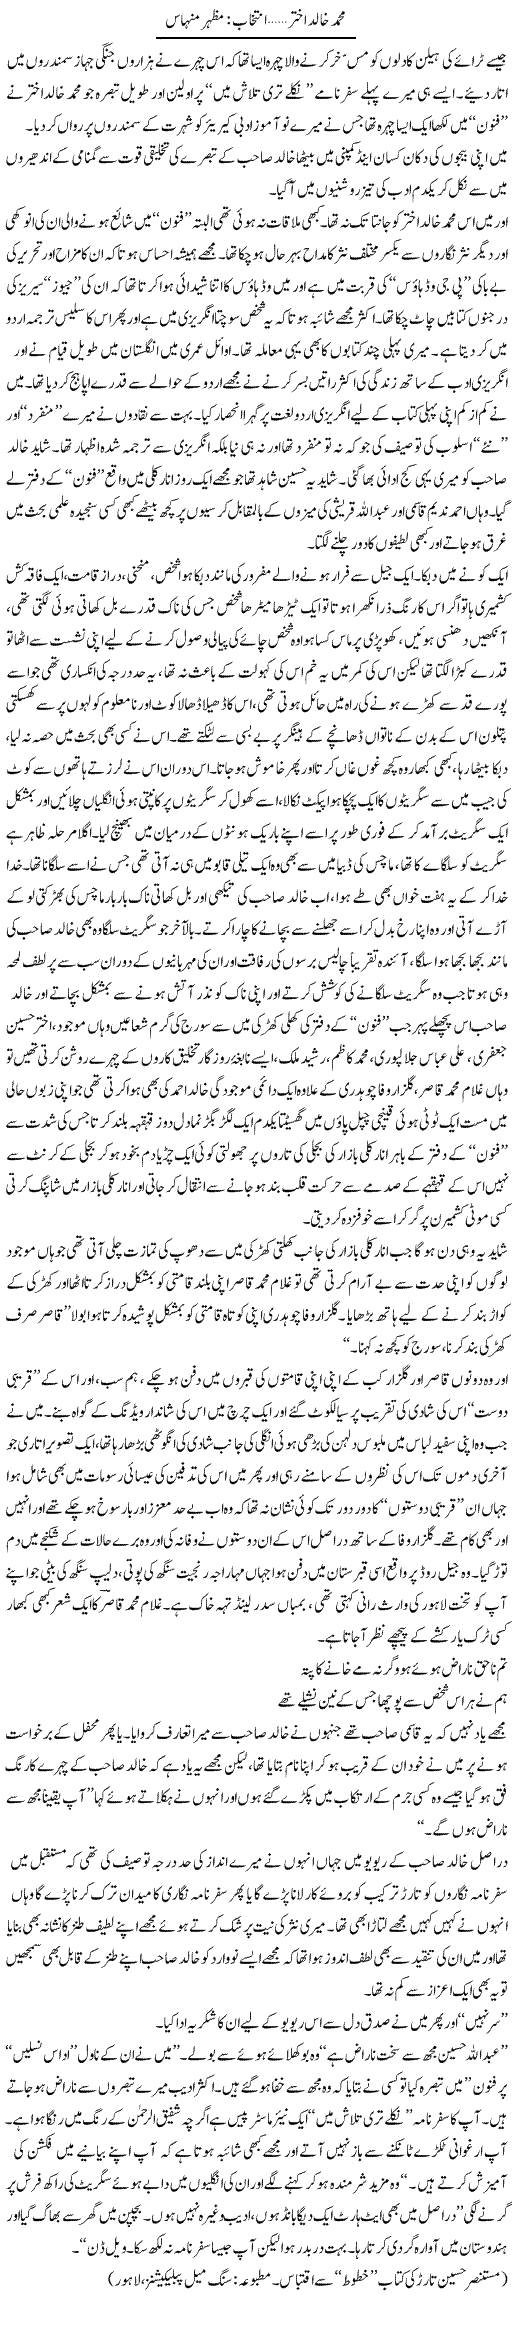 Muhammad Khalid Akhtar | Mazhar Minhas | Daily Urdu Columns